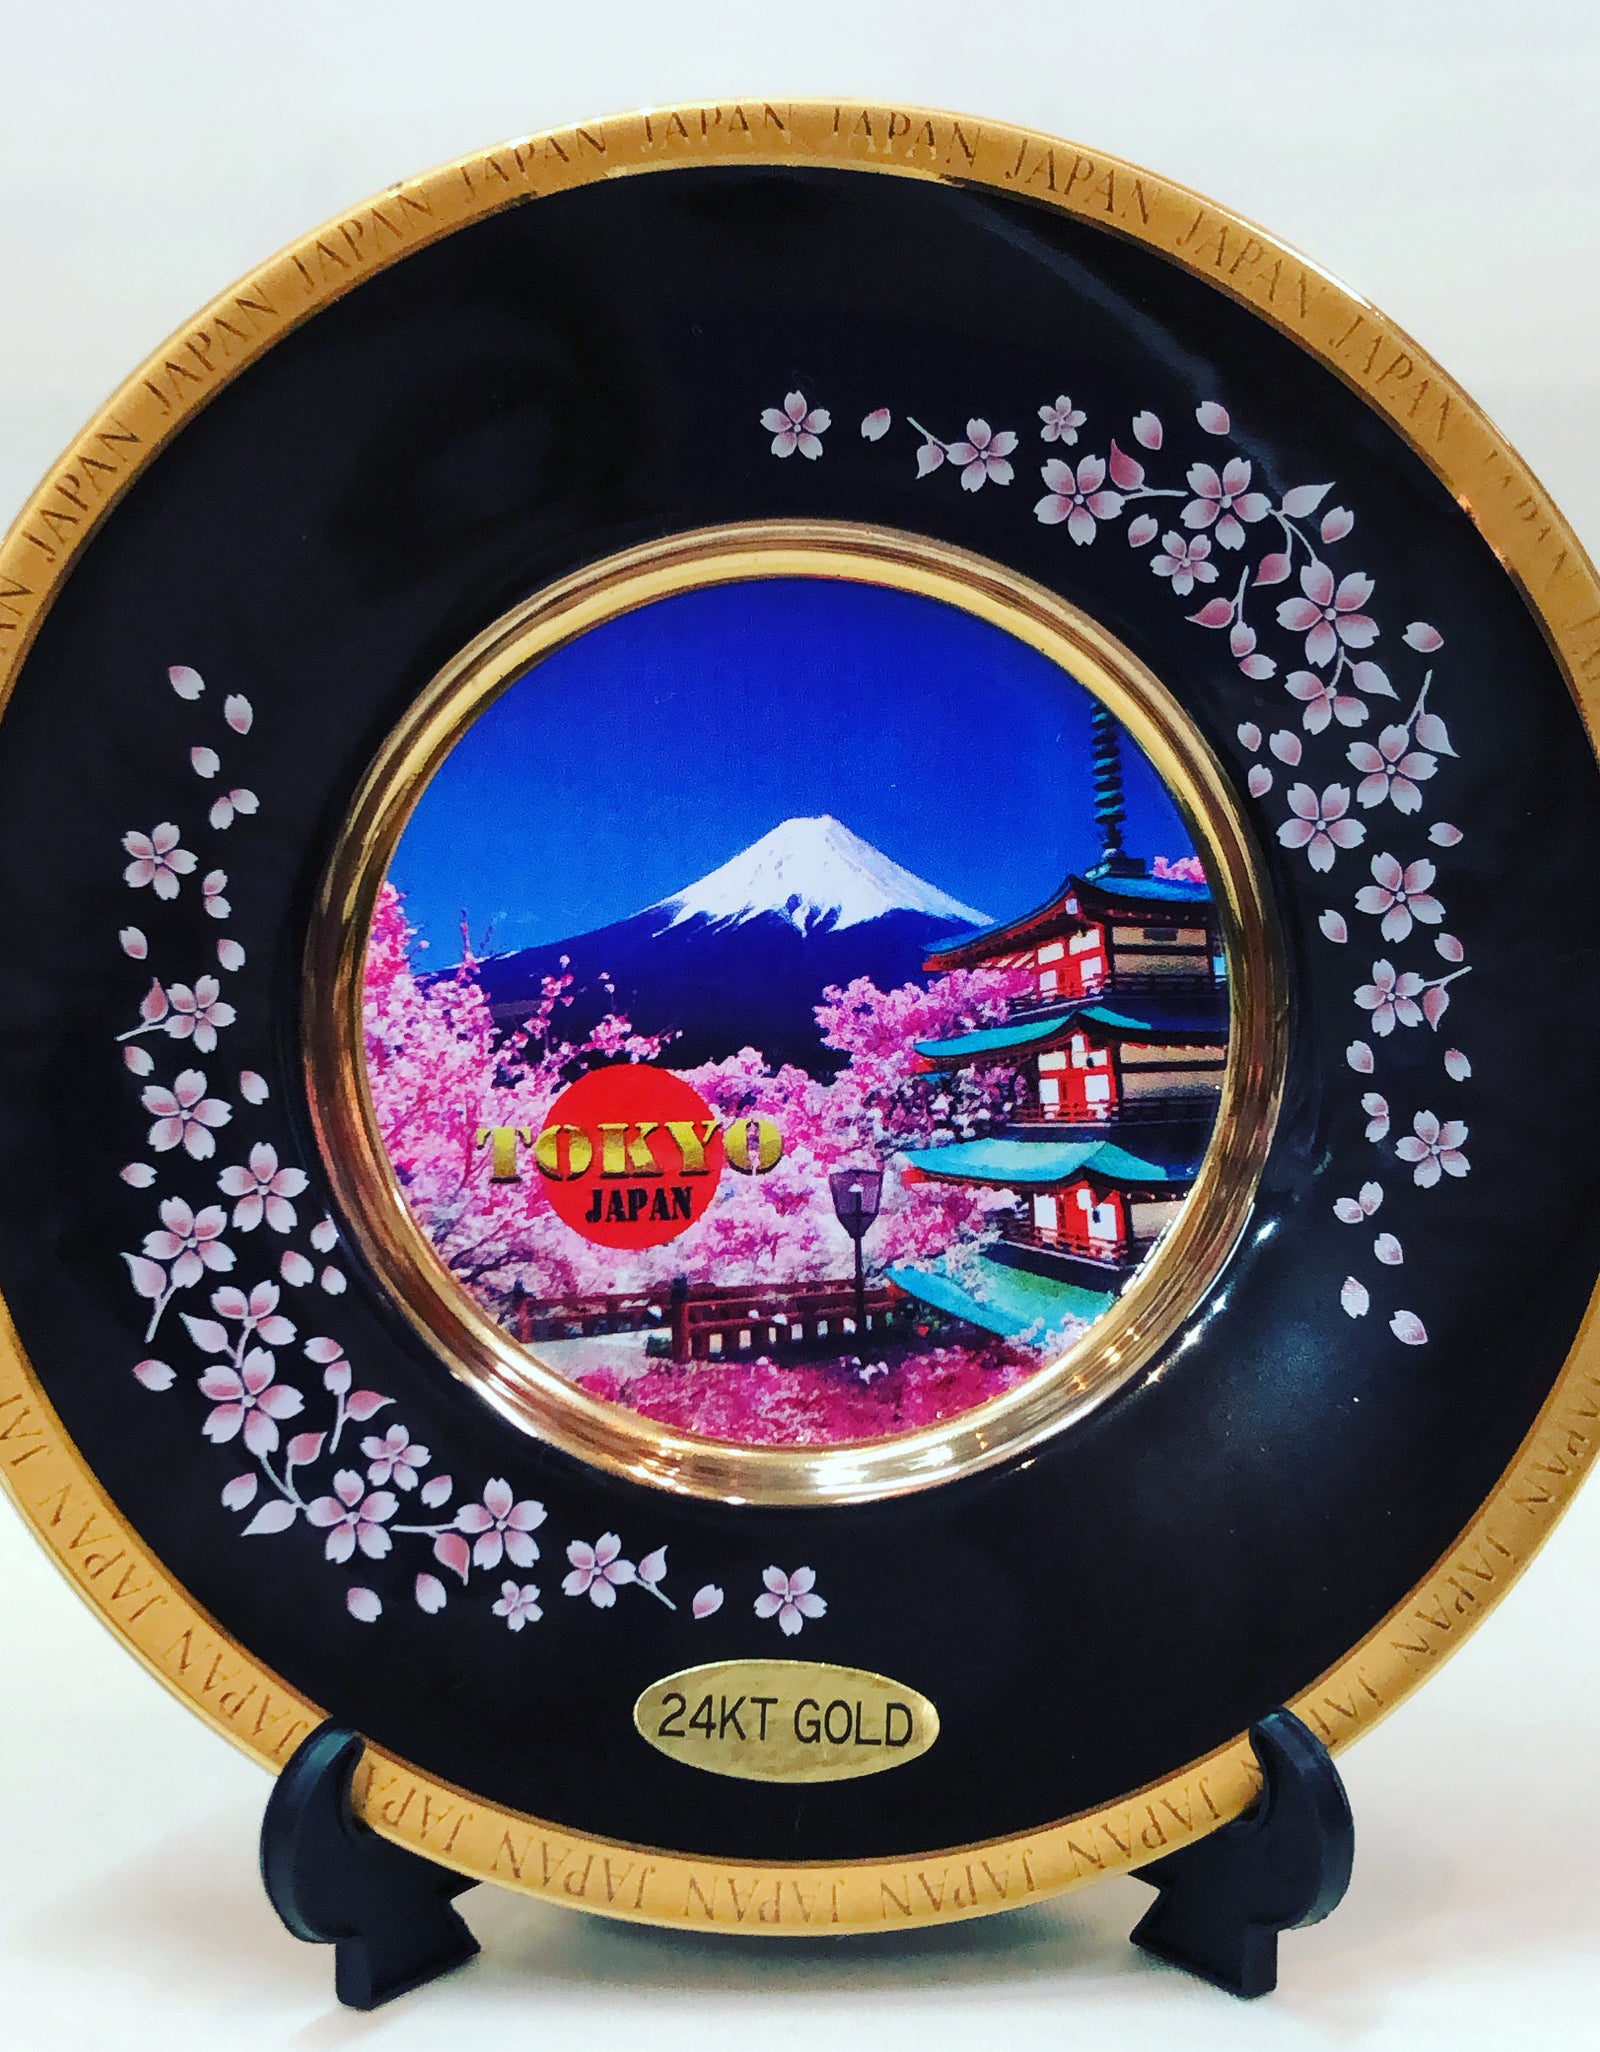 五膳箸 箸セット 日本 東京 JAPAN TOKYO SOURVENIR お土産 浮世絵 戦国 